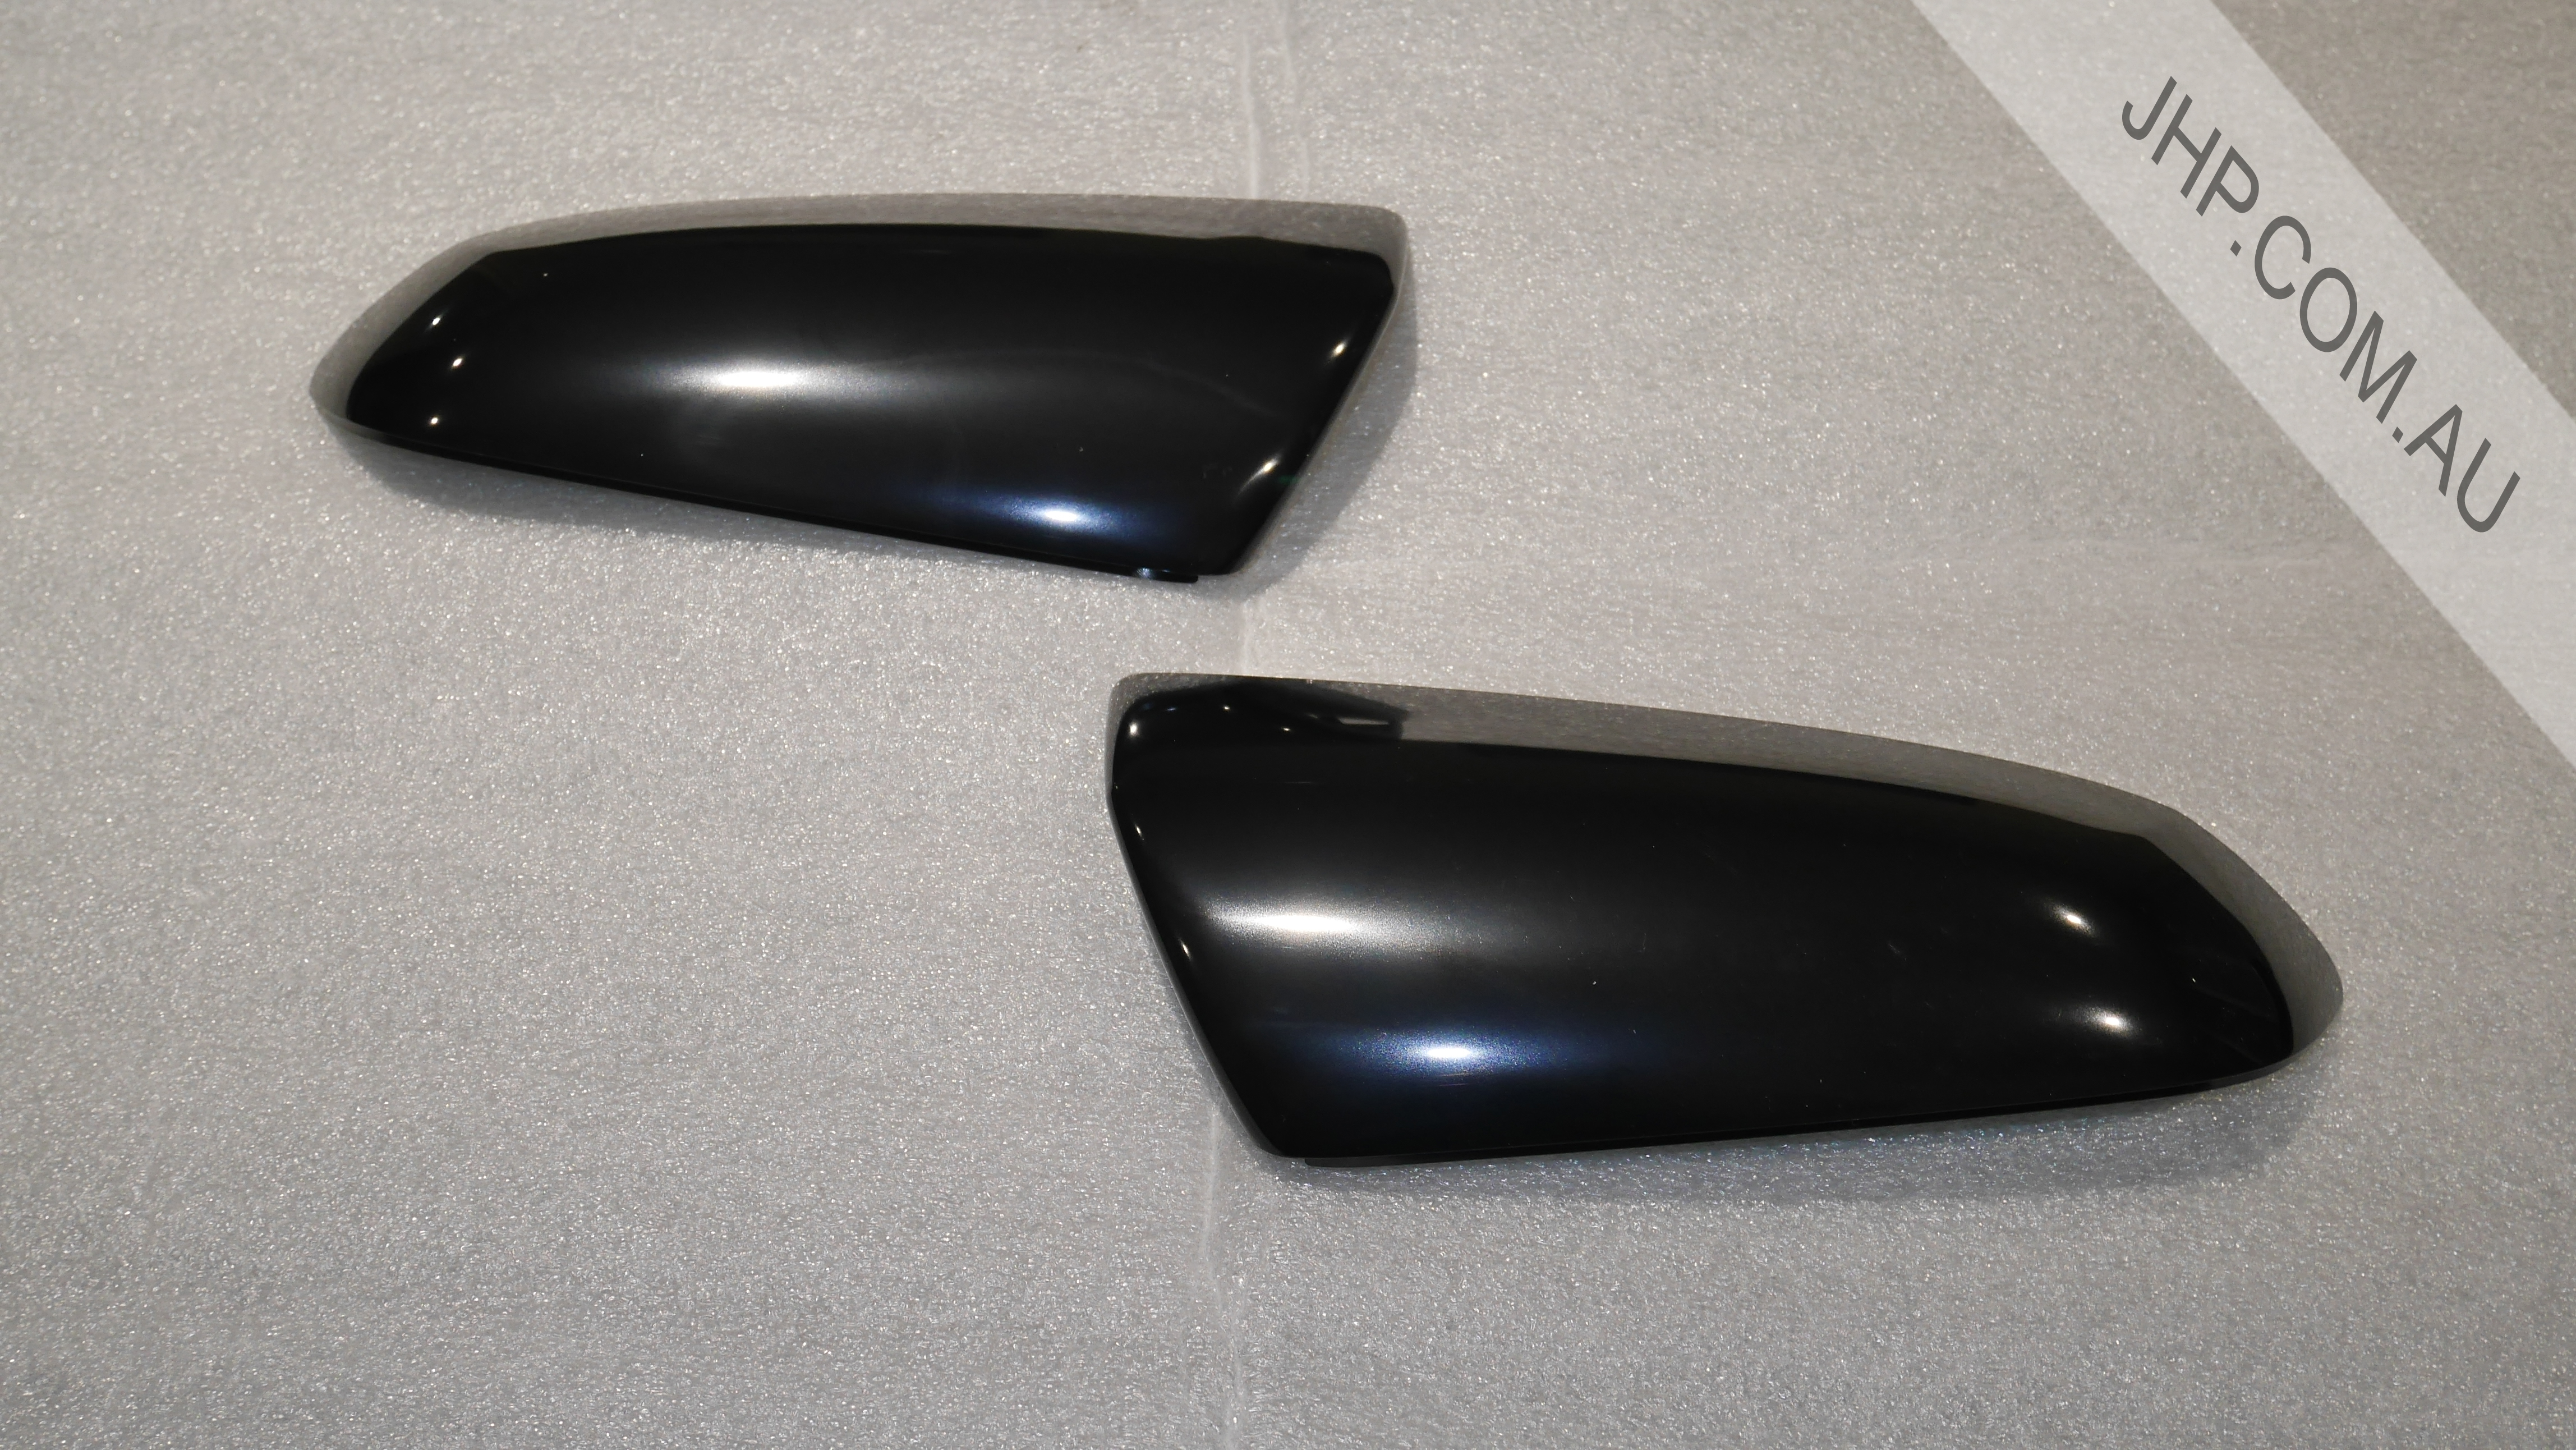 LED mirror covers Prepainted Fantom Black Caps for HSV Caprice WM Commodore VE